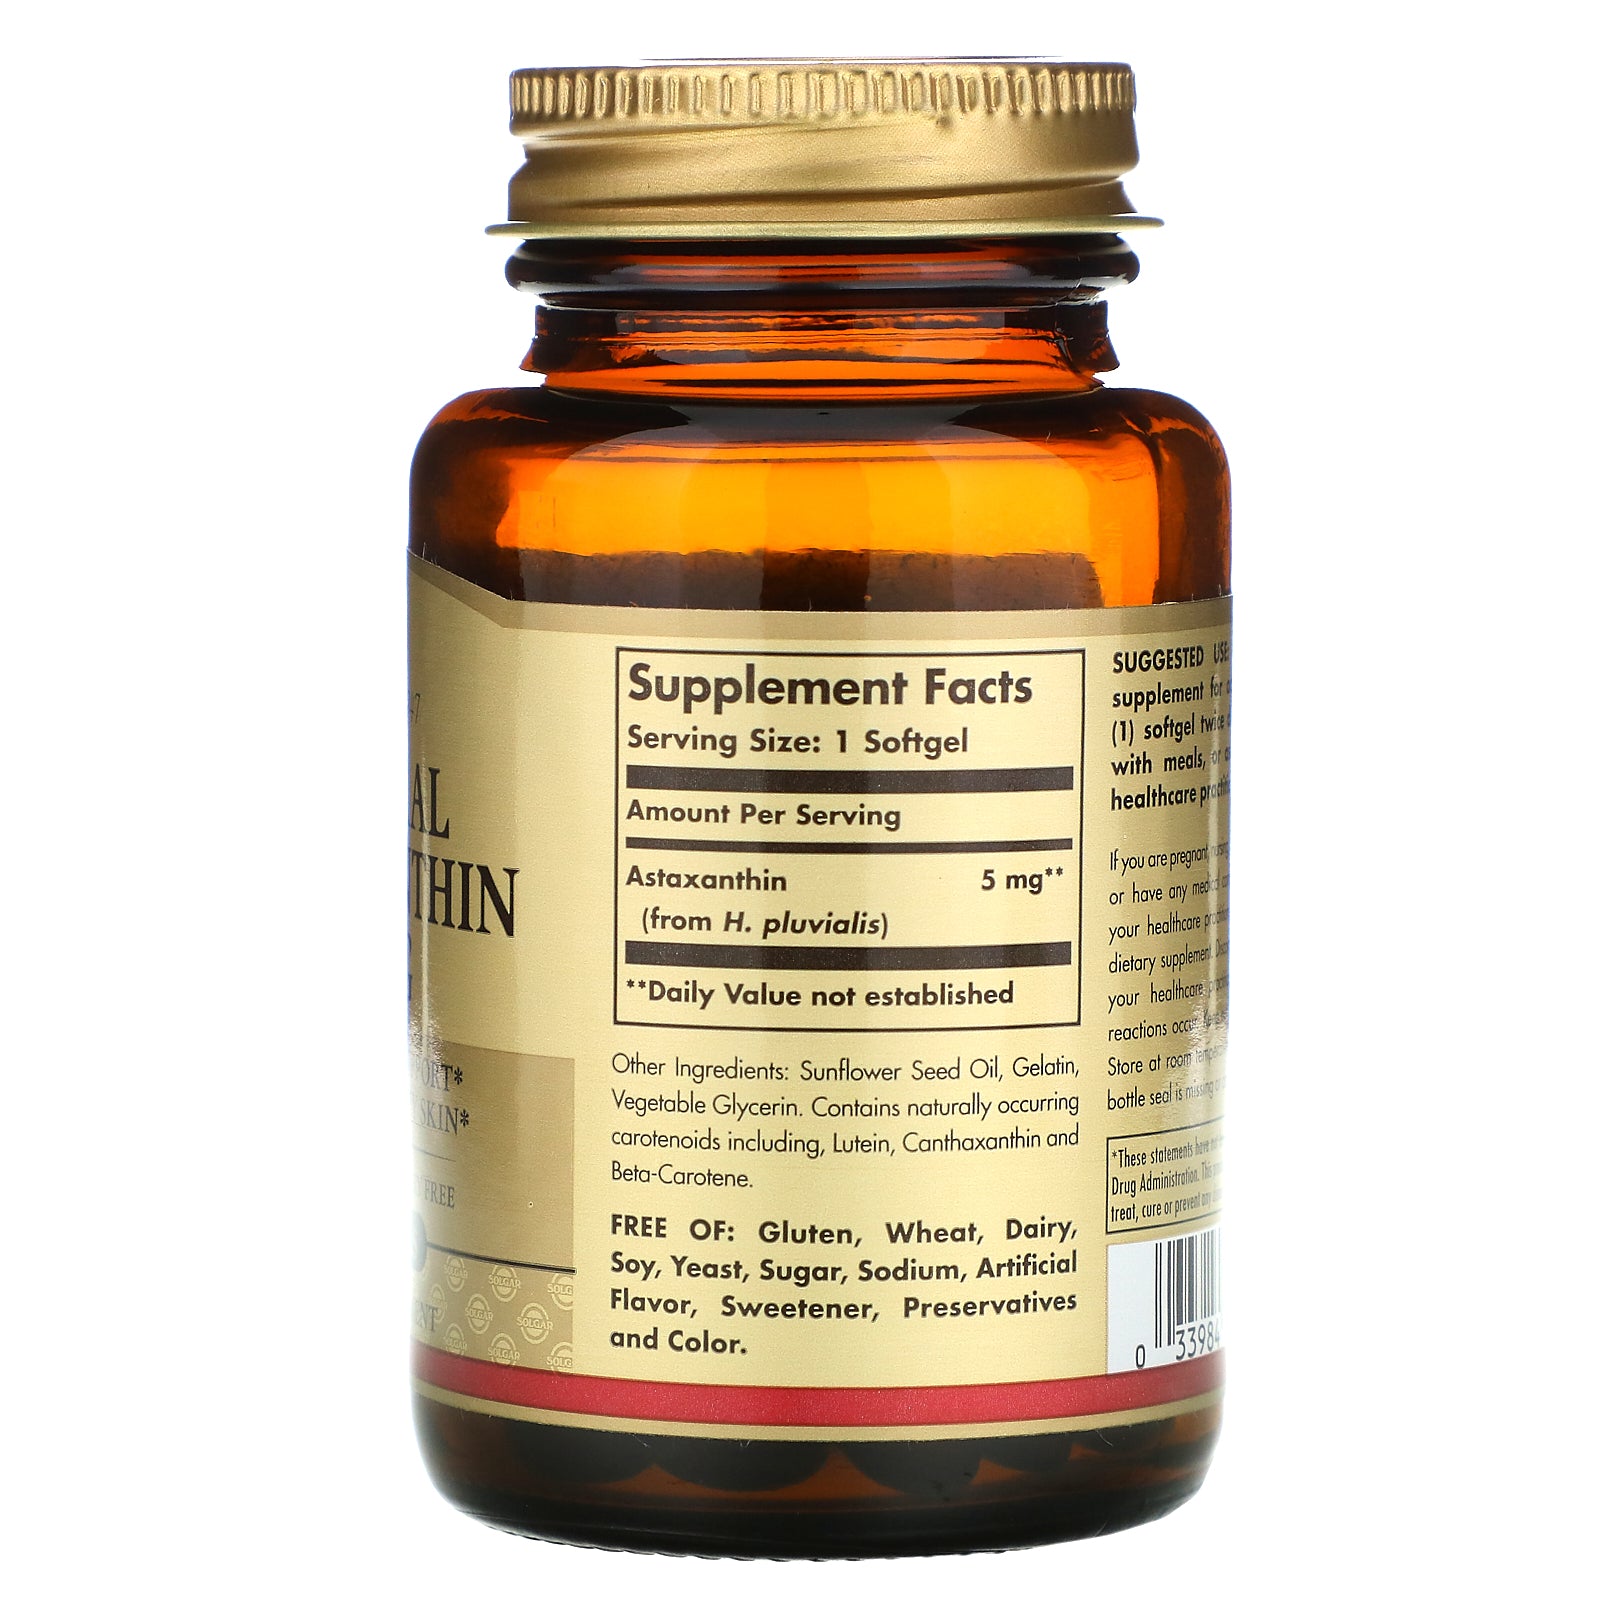 Solgar, Natural Astaxanthin, 5 mg, 60 Softgels